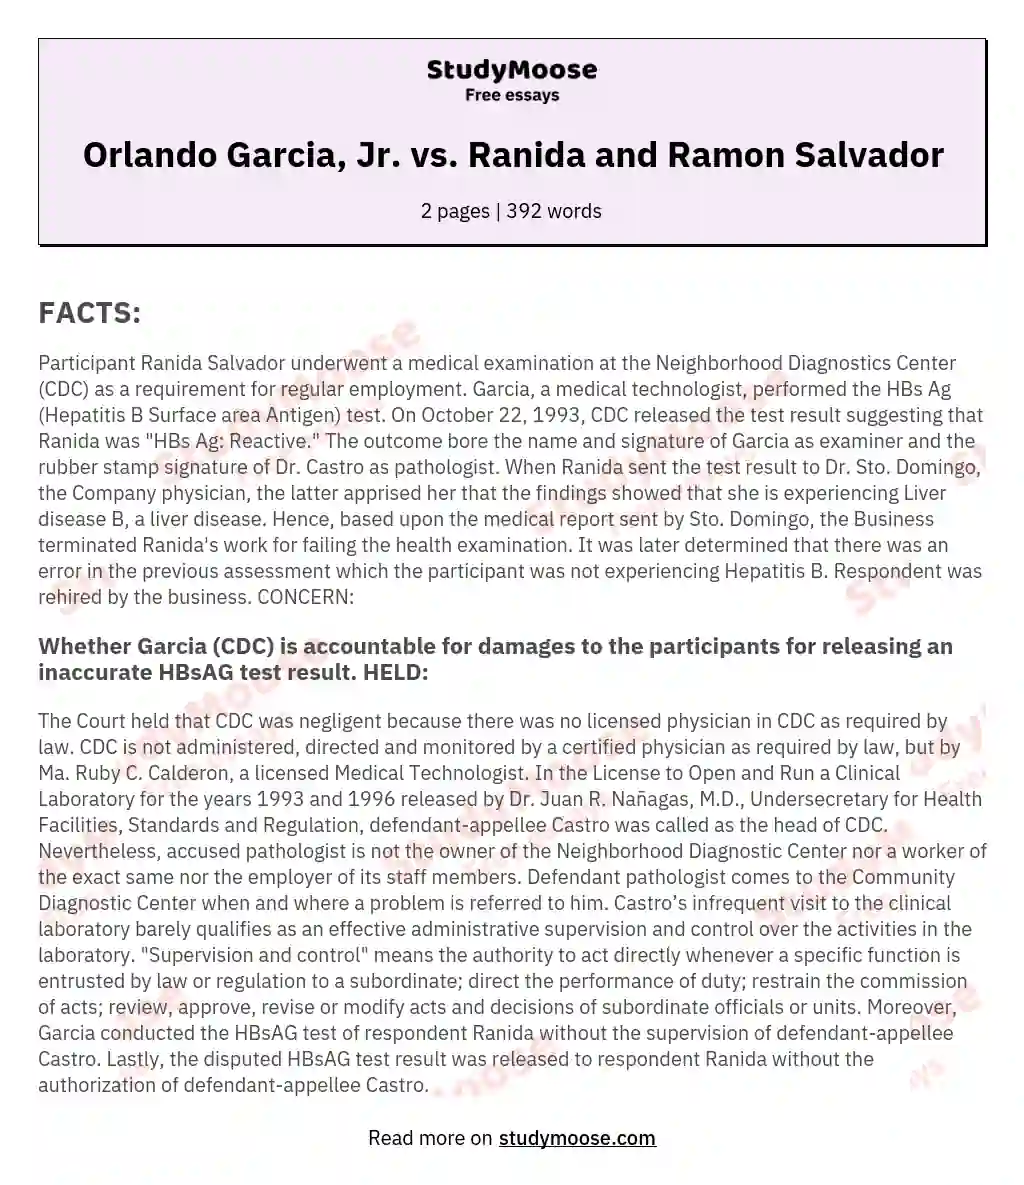 Orlando Garcia, Jr. vs. Ranida and Ramon Salvador